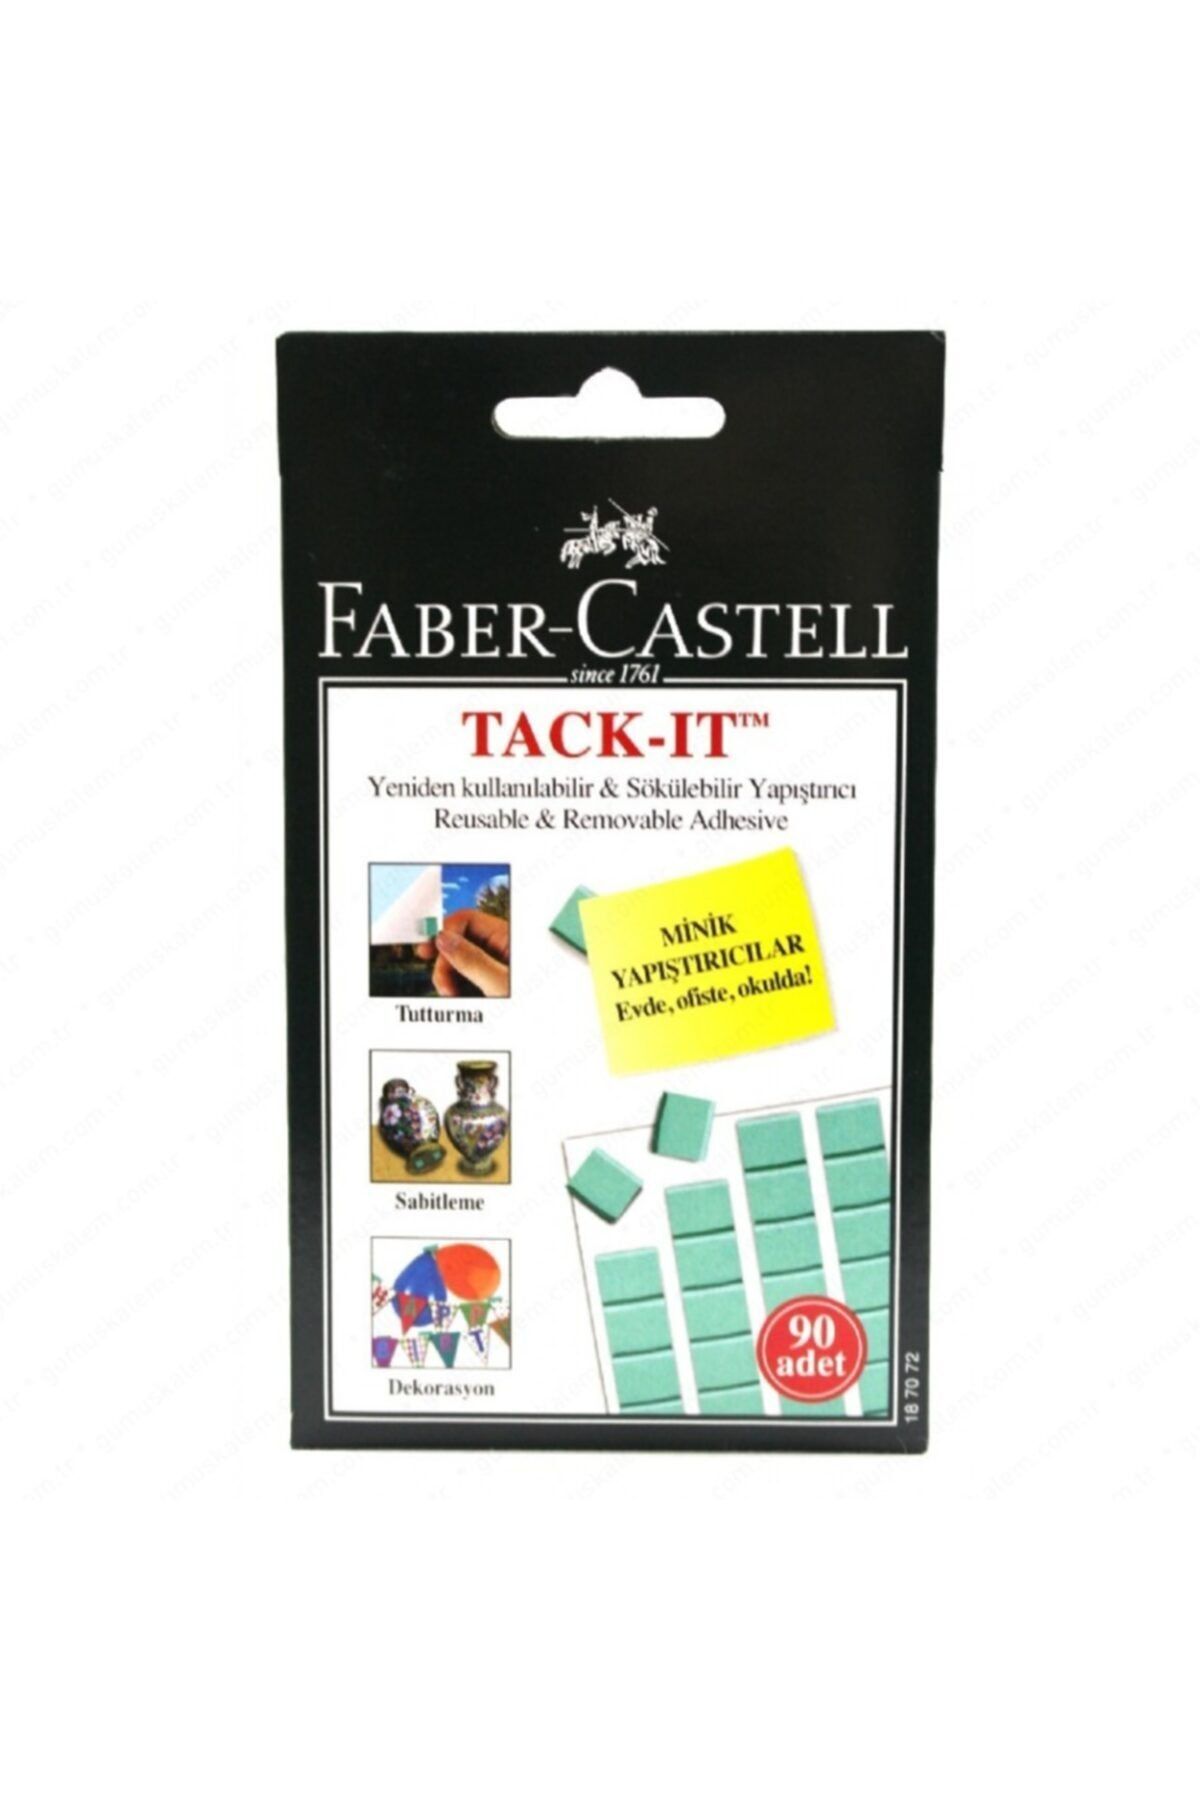 Faber Castell Tack-it (patafix) 90 Adet Yeşil